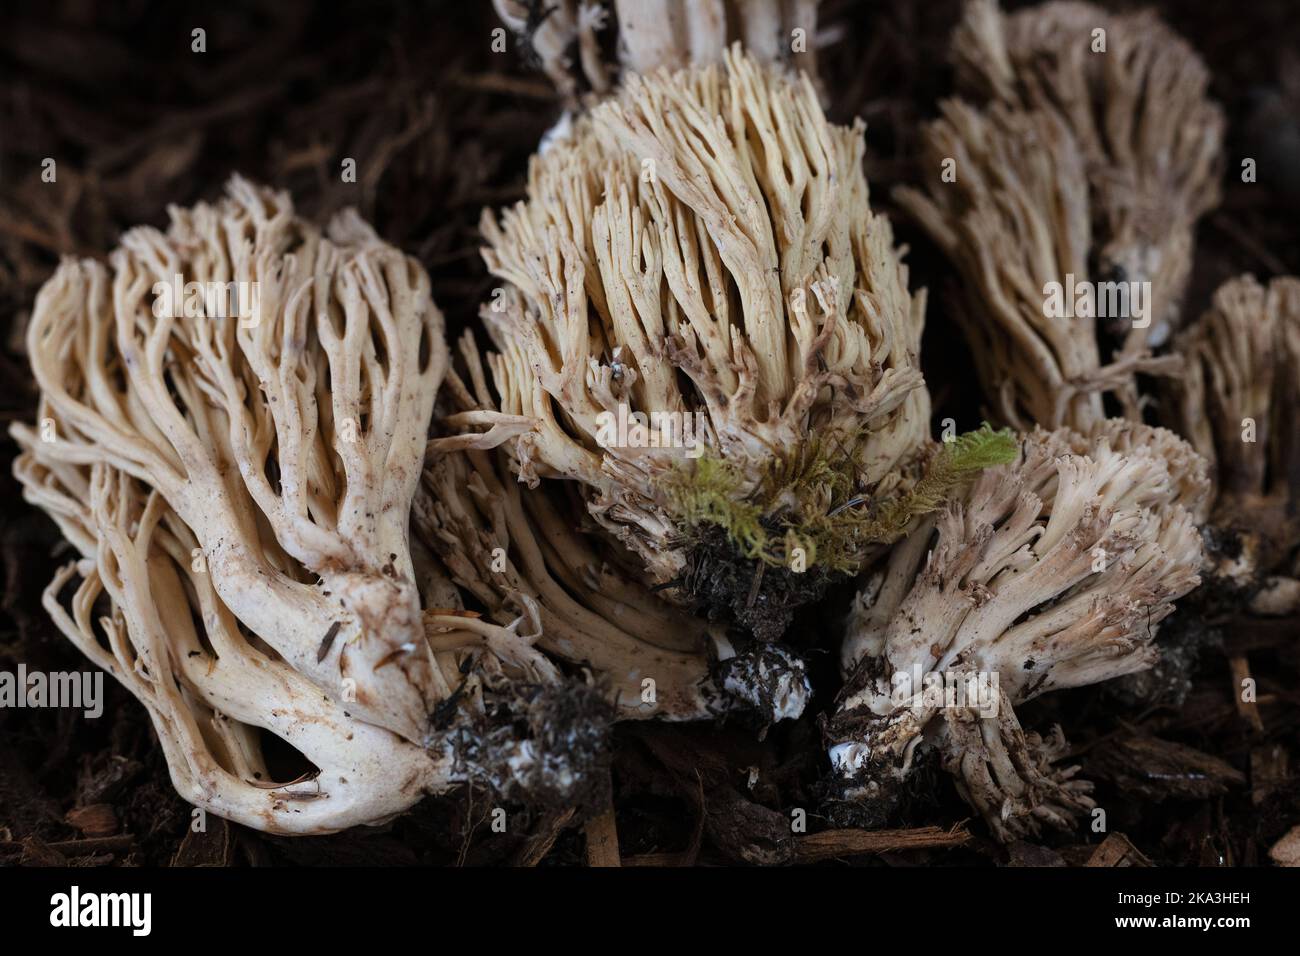 Ramaria acrisiccescens - blah coral mushrooms. Stock Photo